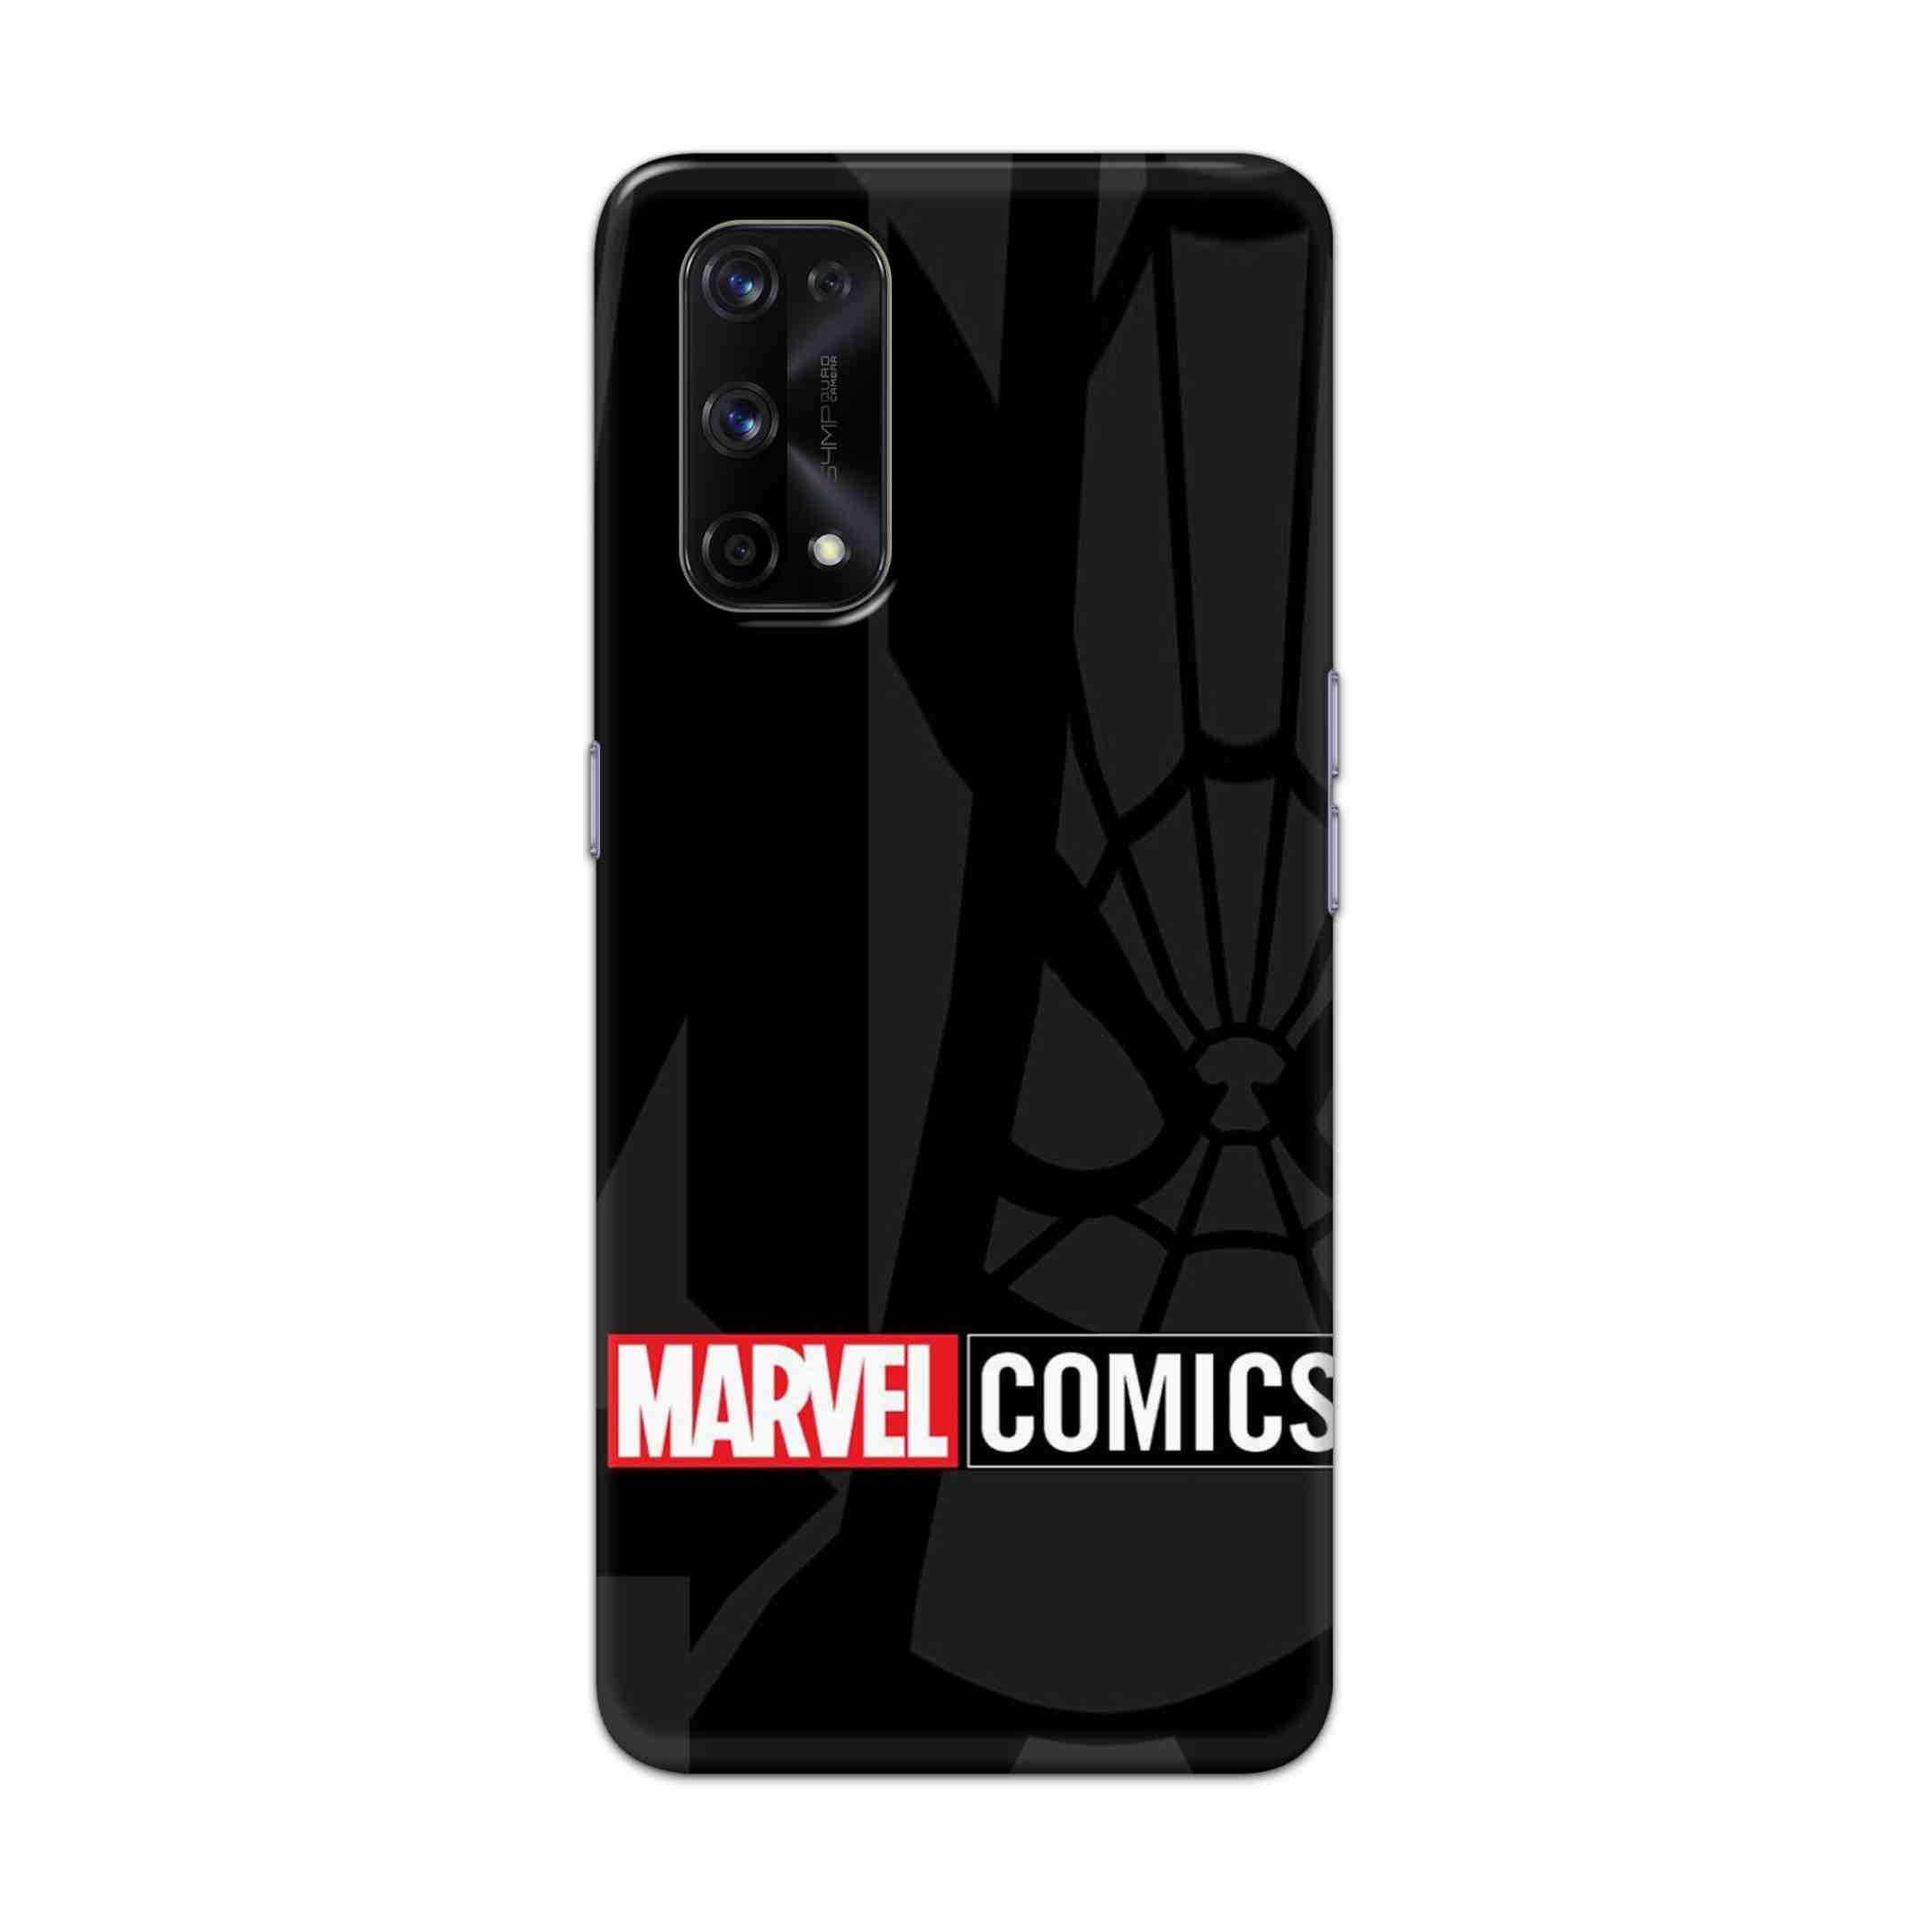 Buy Marvel Comics Hard Back Mobile Phone Case Cover For Realme X7 Pro Online